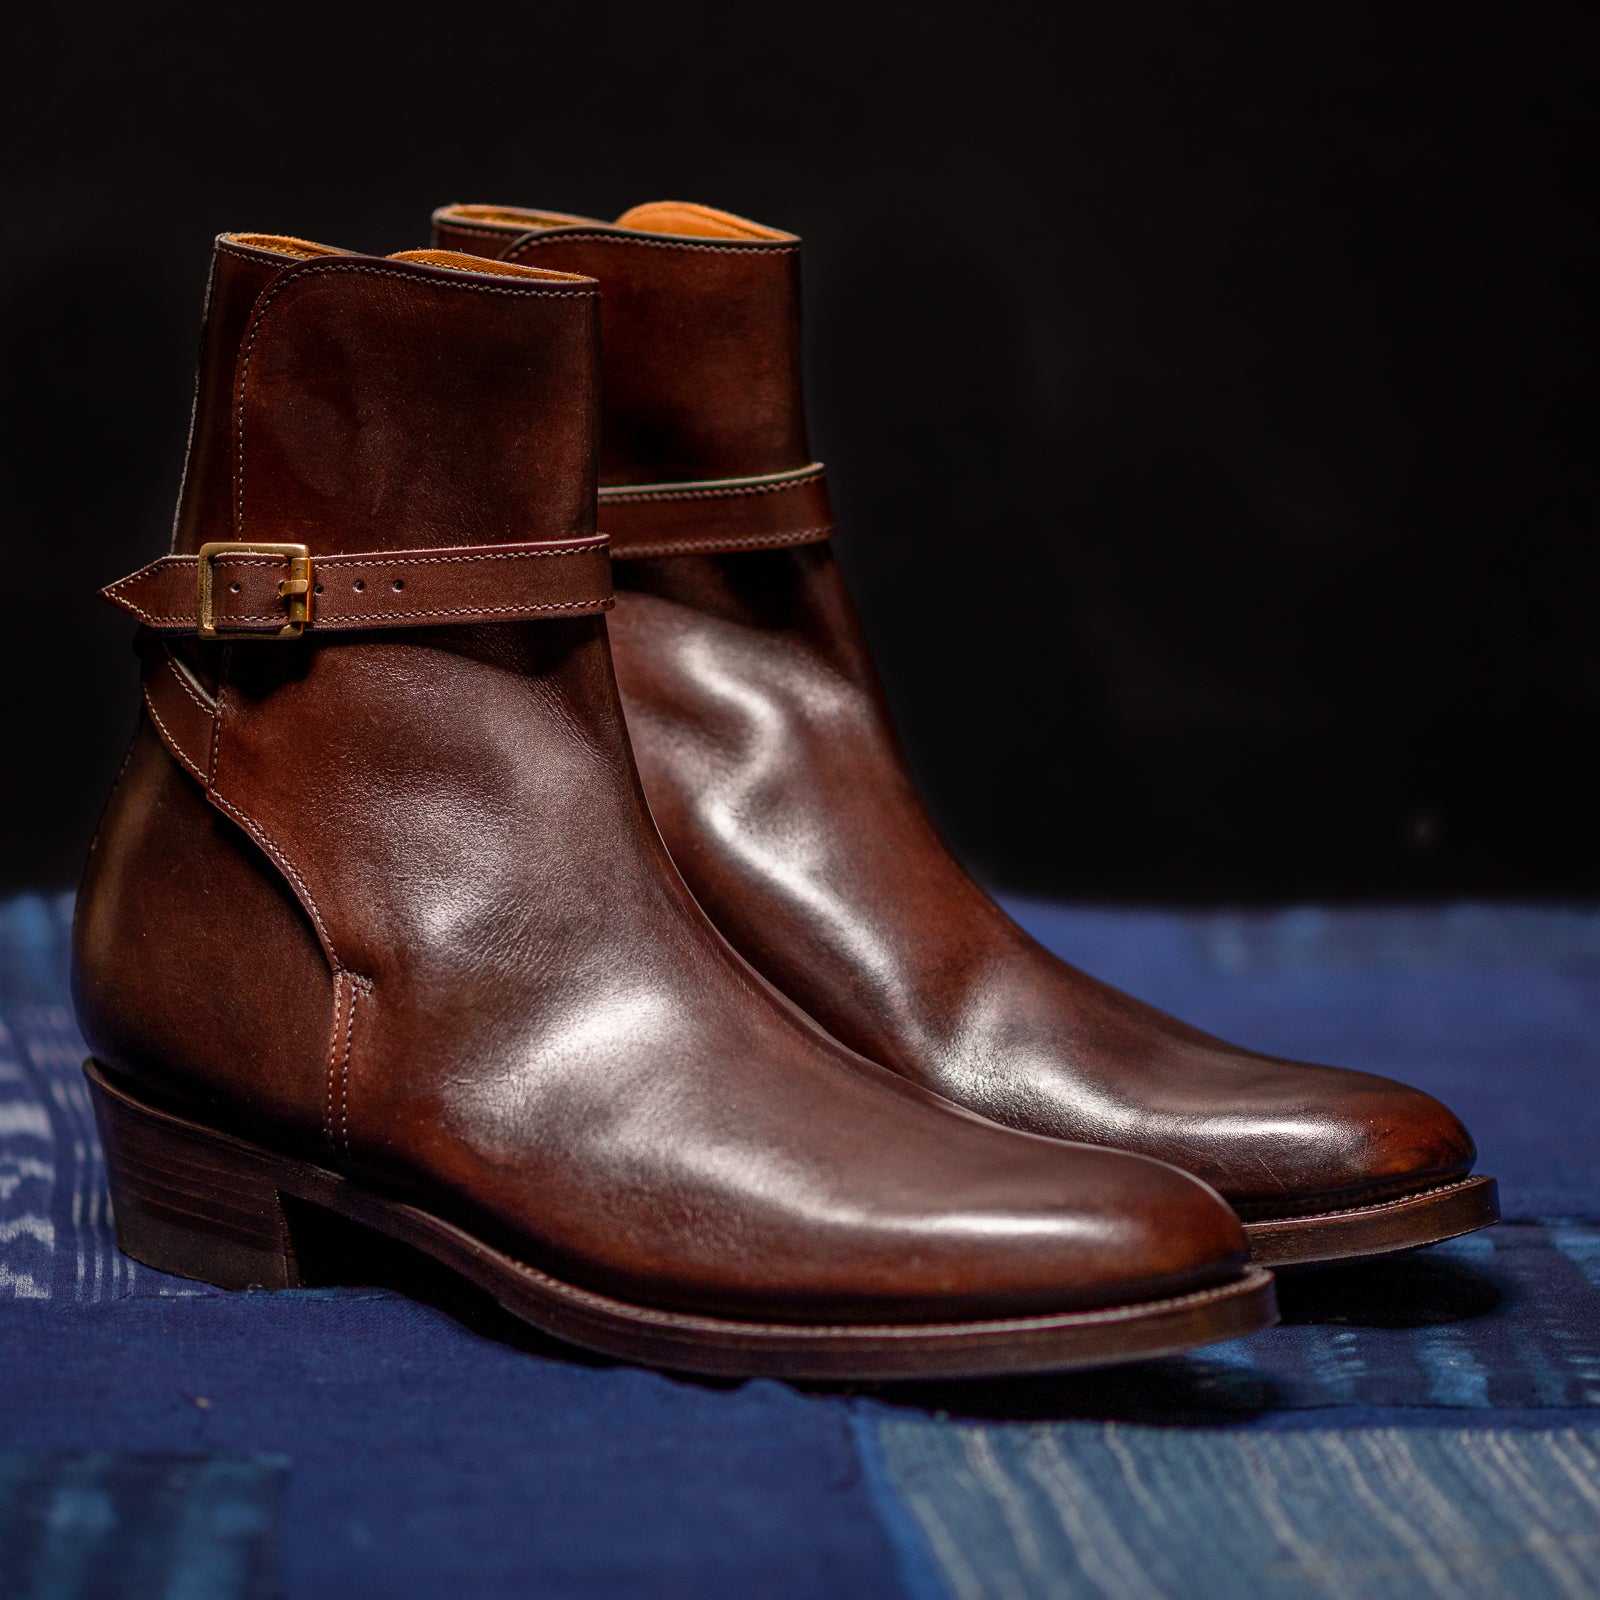 Clinch Jodhpur boots 9h 先芯なし - 靴